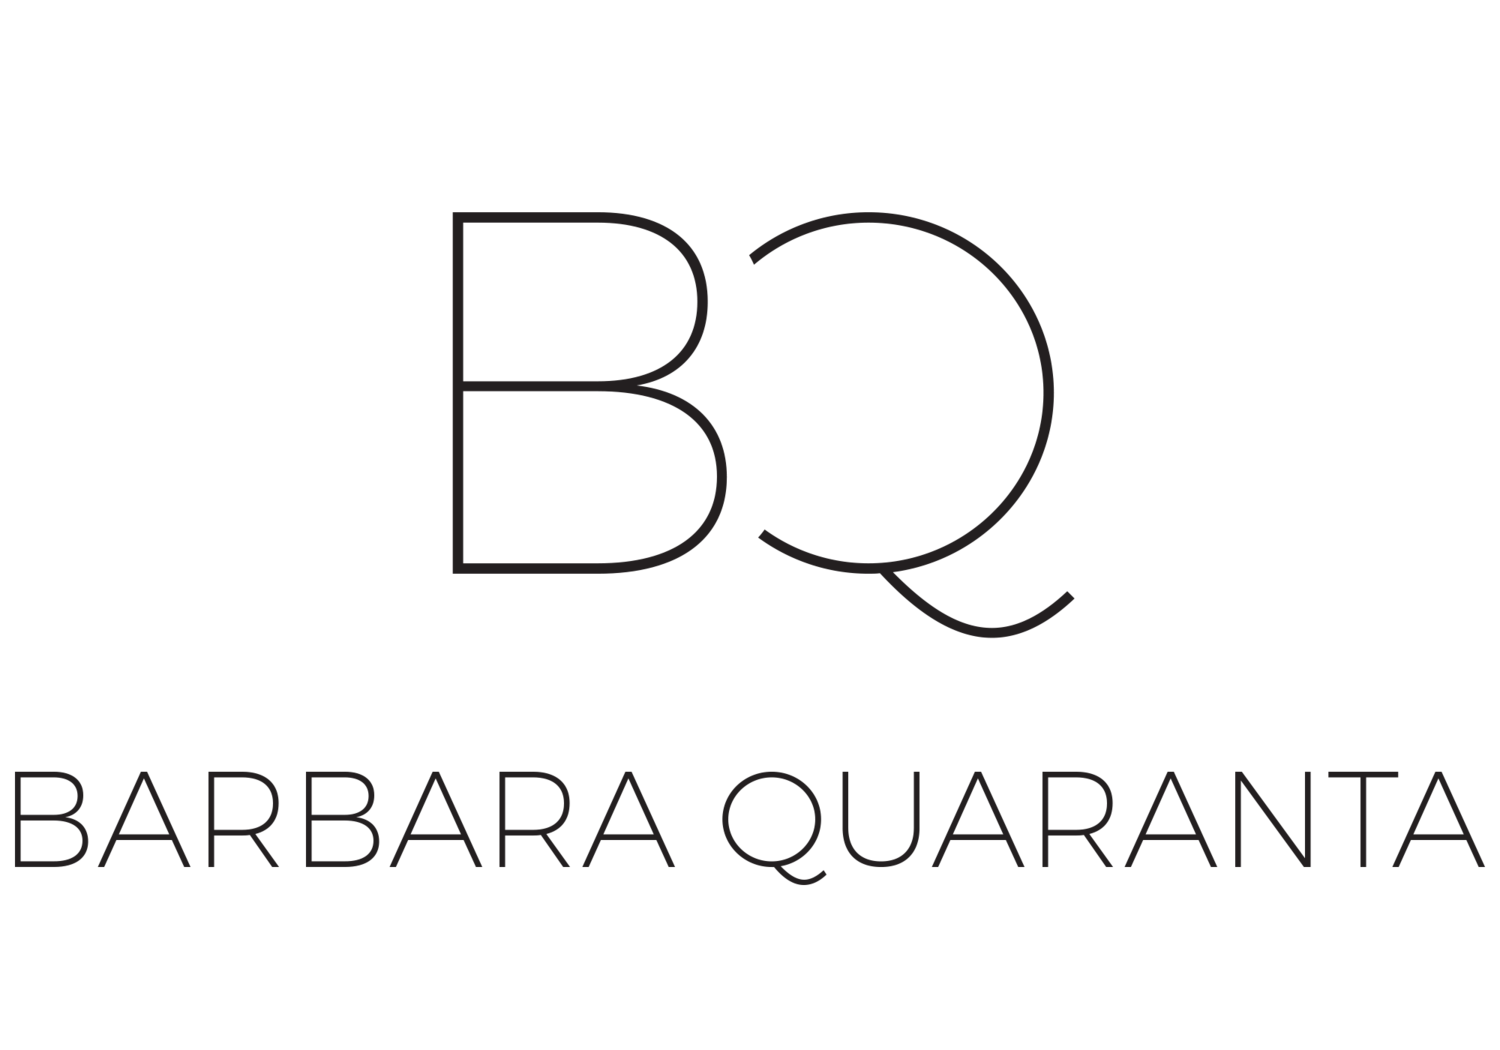 Barbara Quaranta